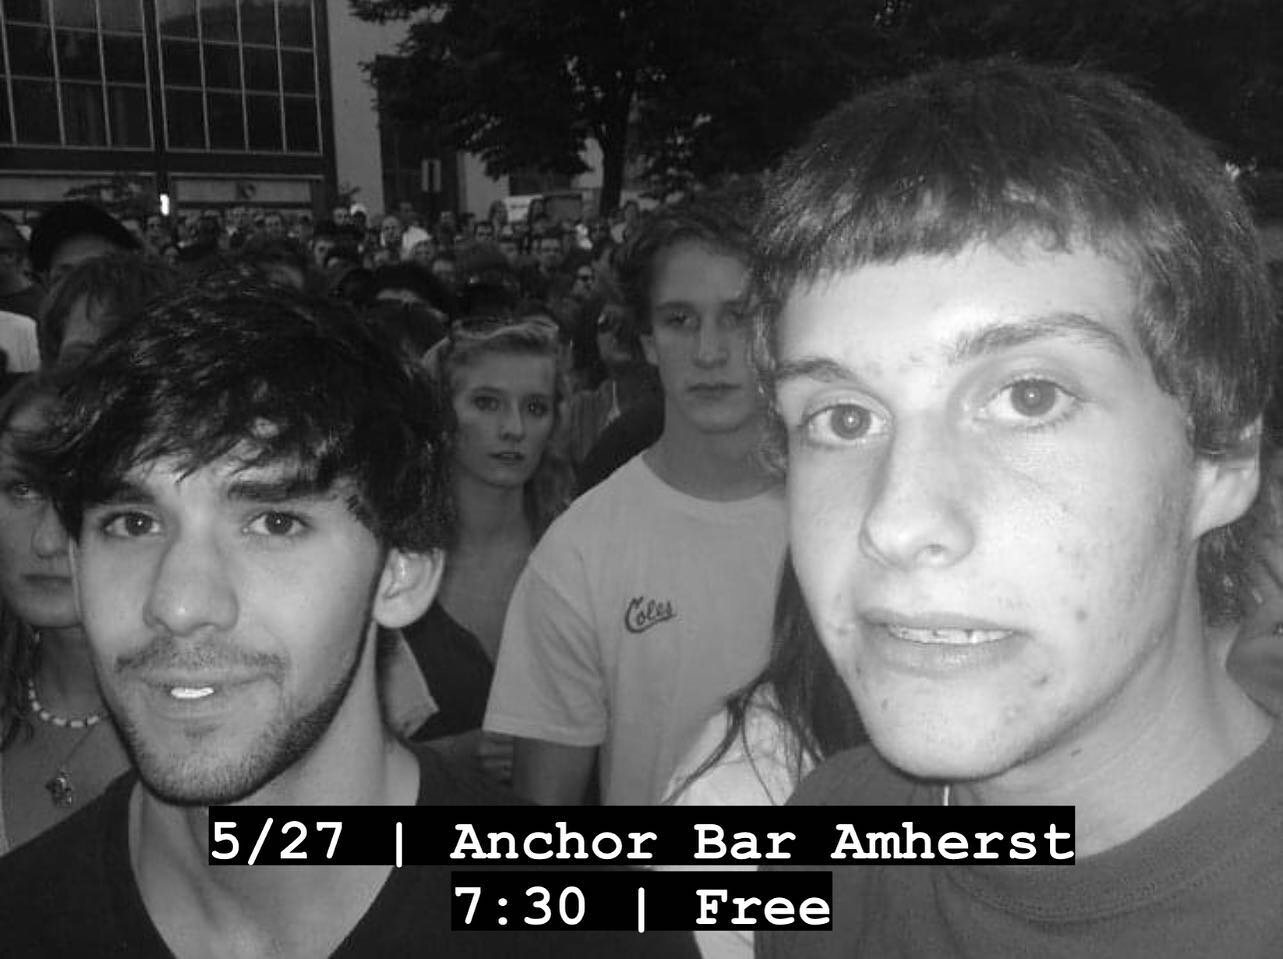 Friday night at Anchor Bar Amherst | Suburban boys return home.
.
.
.
.
.
#livemusic #buffalo #buffalony #stepoutbuffalo #risebflo #coverband #thursdayinthesquare